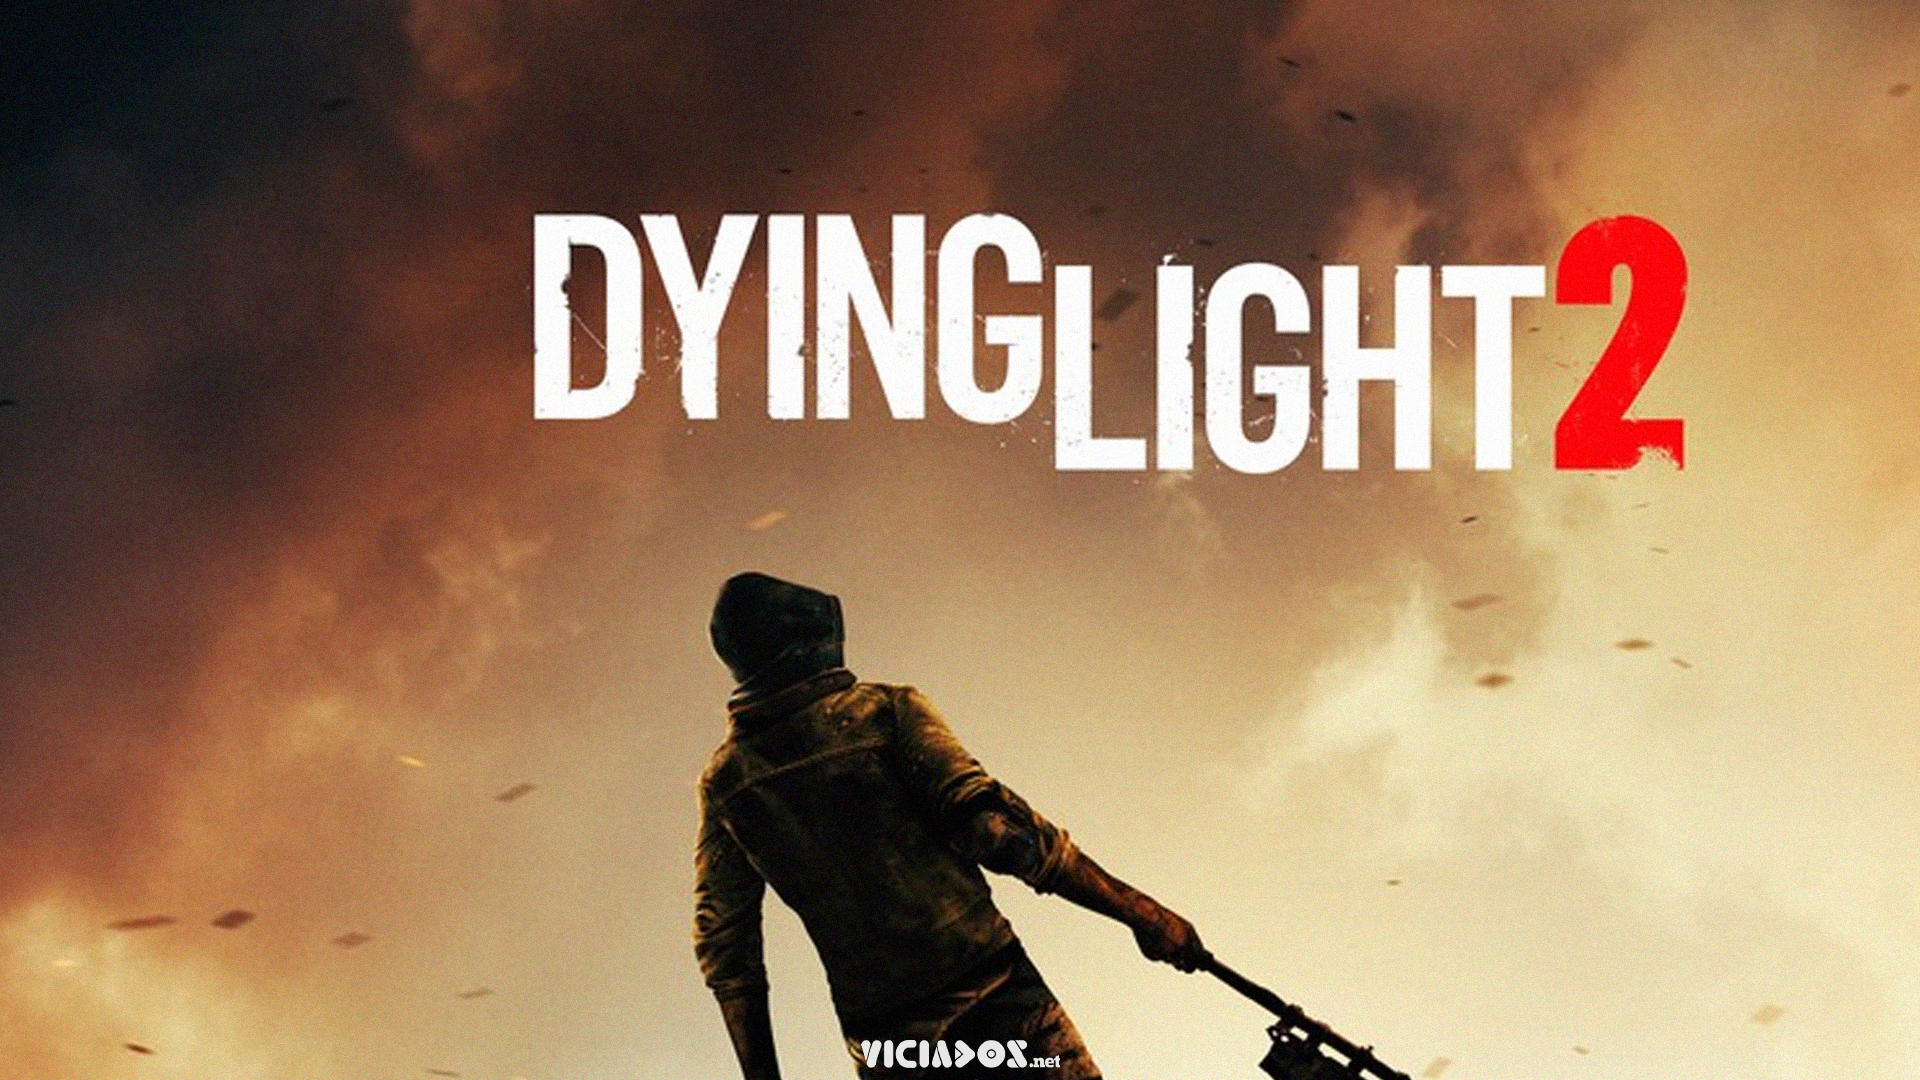 Nova aventura da Techland no mundo apocalíptico de Dying Light,. Confira a análise da Viciados.